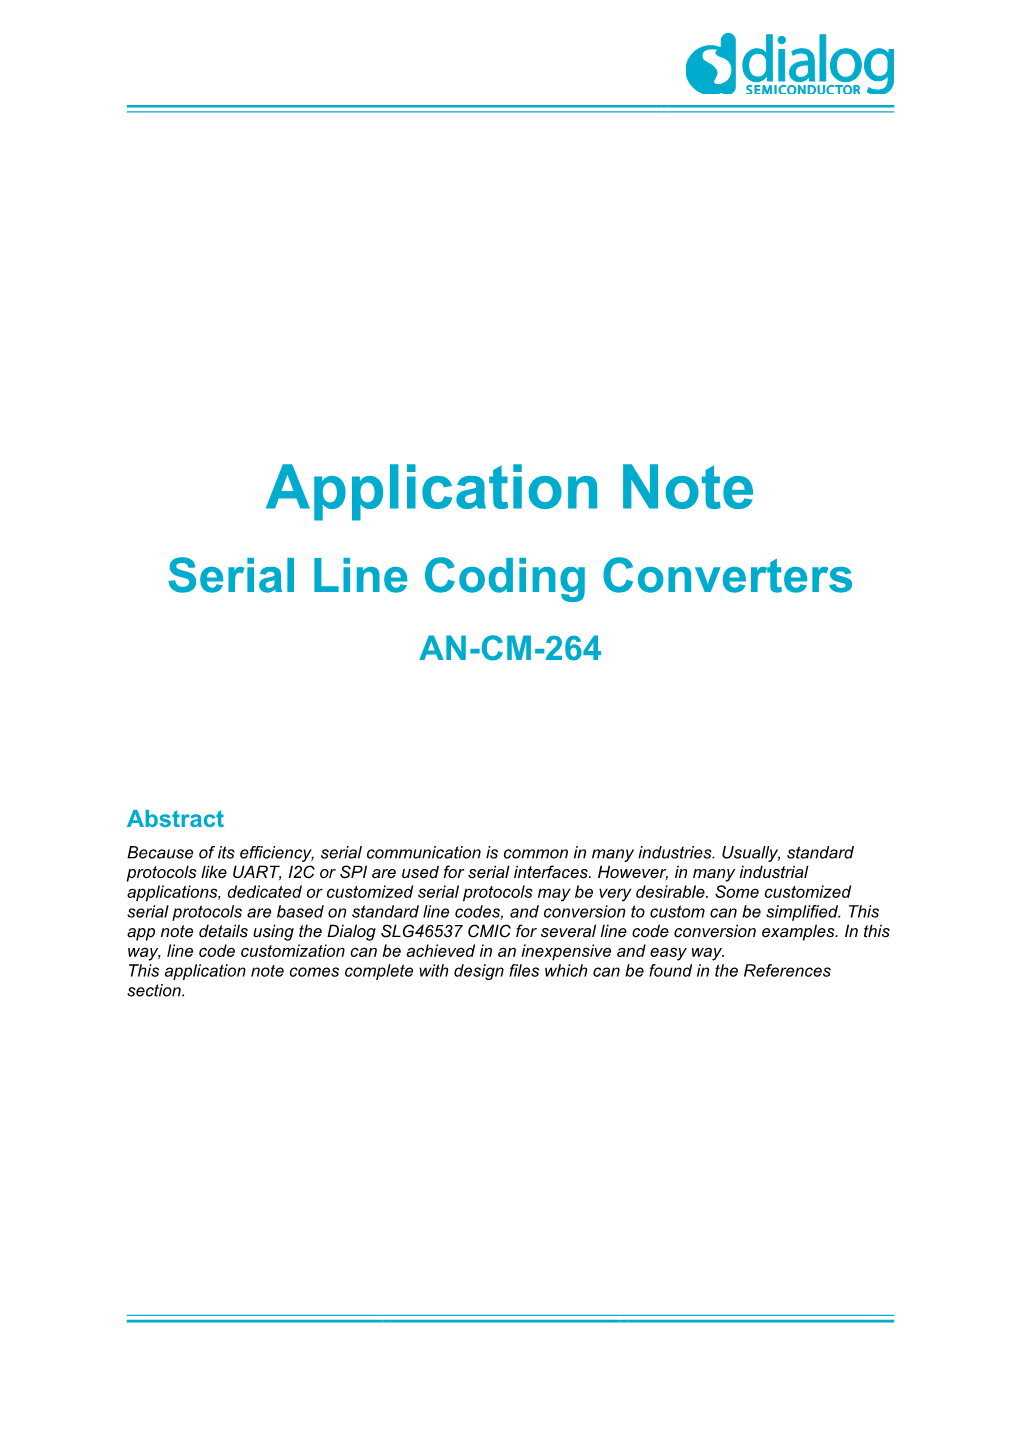 Serial Line Coding Converters AN-CM-264